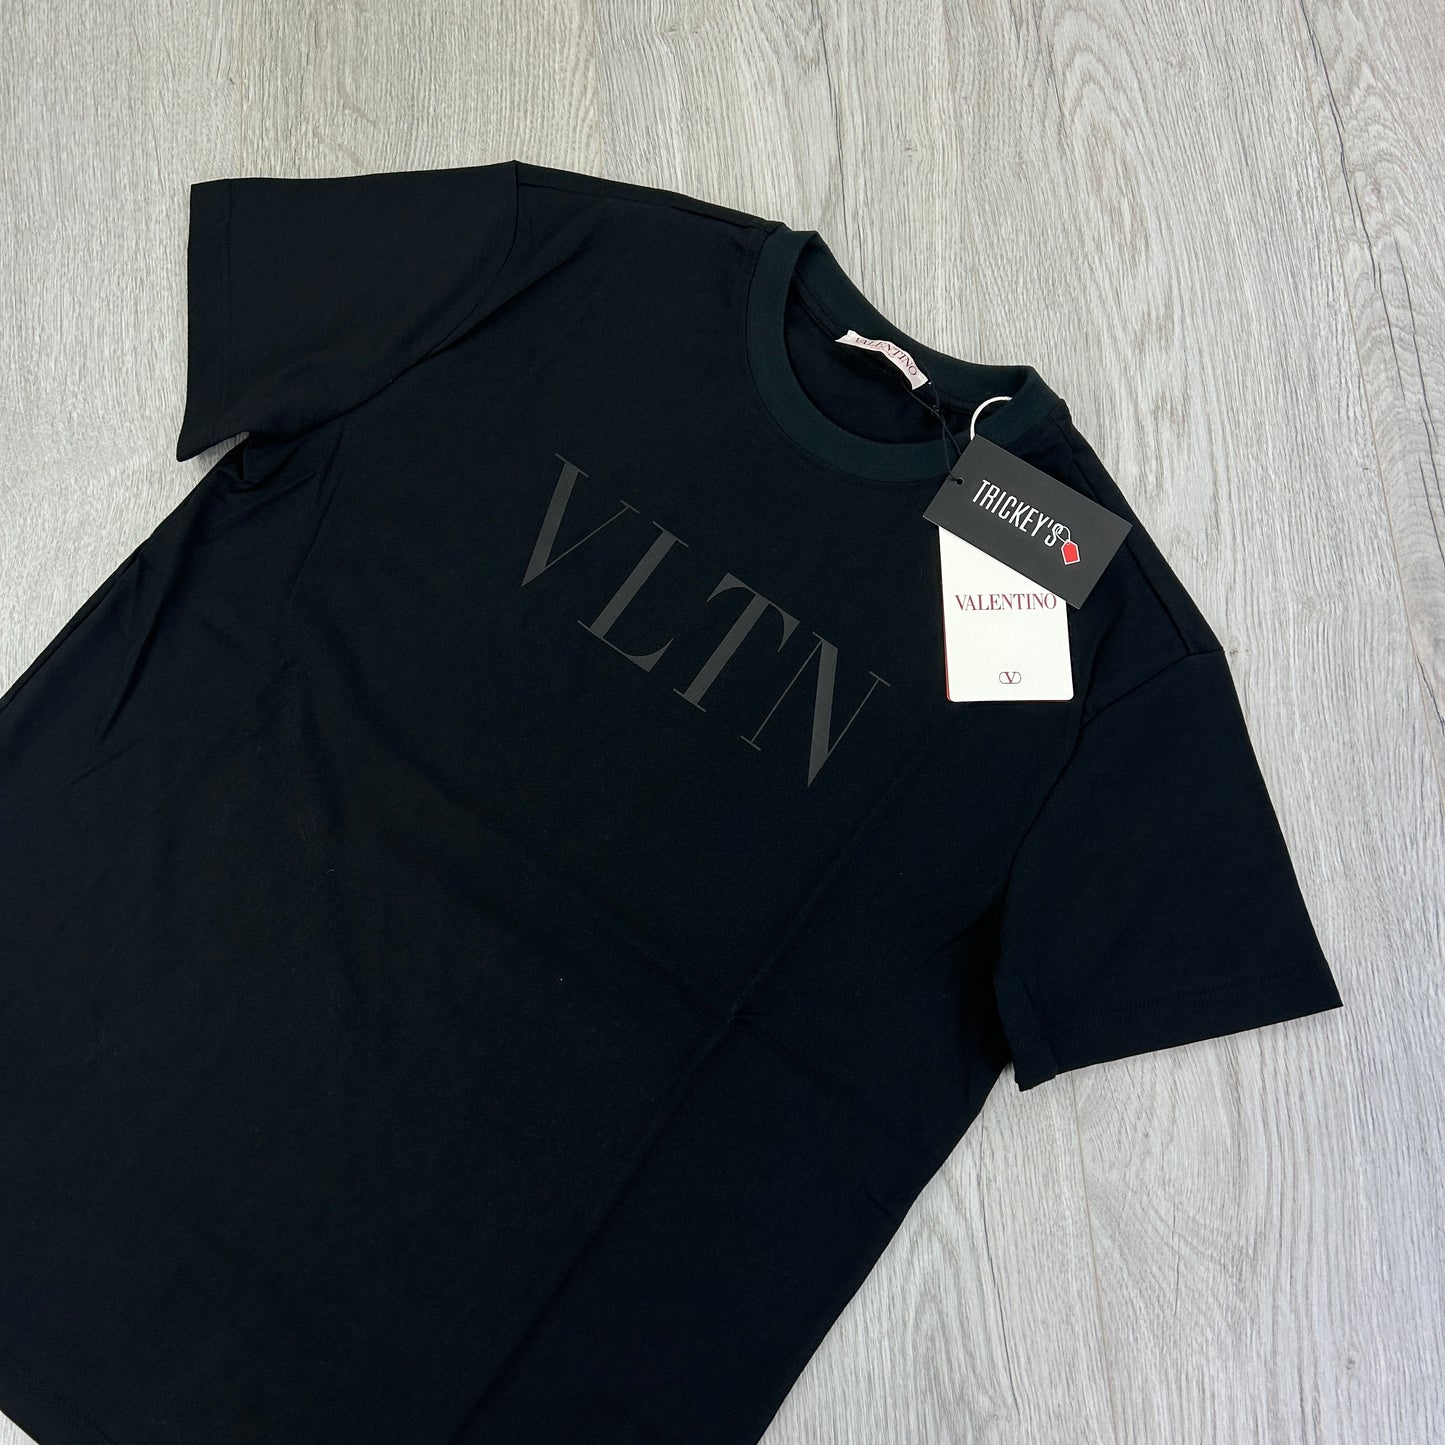 Valentino Men’s ‘VLTN’ Black T-shirt